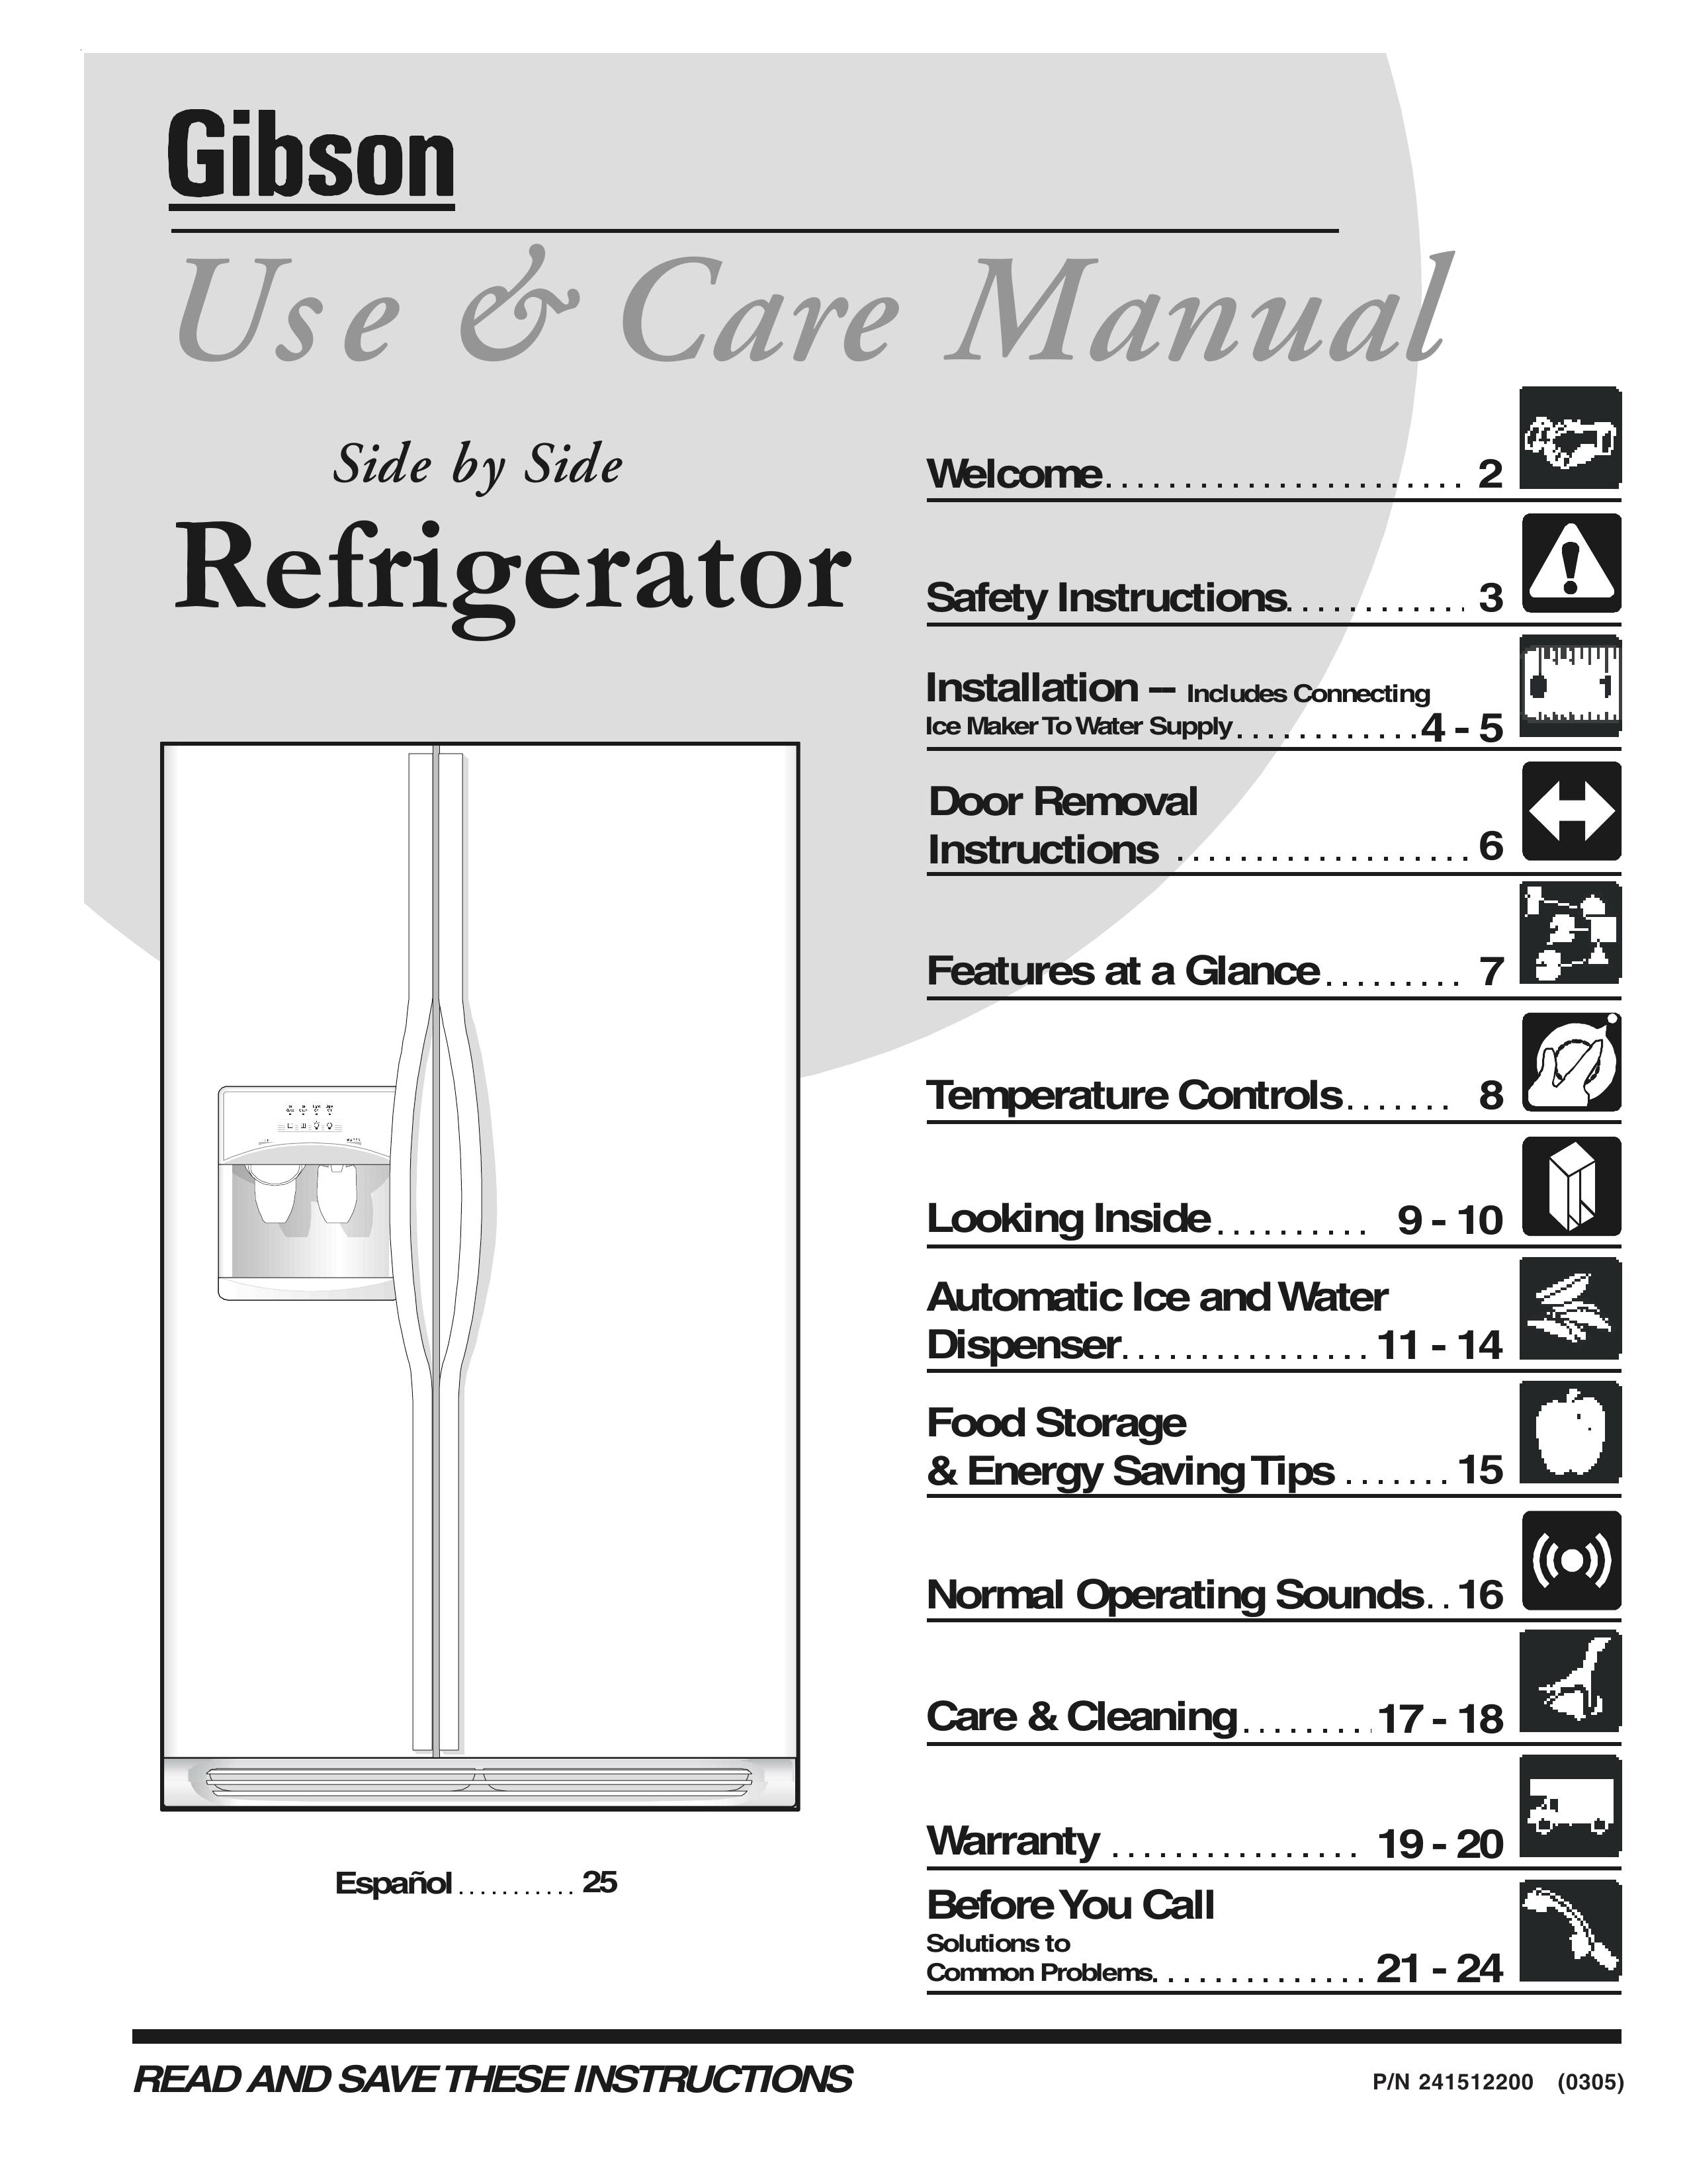 Electrolux - Gibson 241512200 Refrigerator User Manual